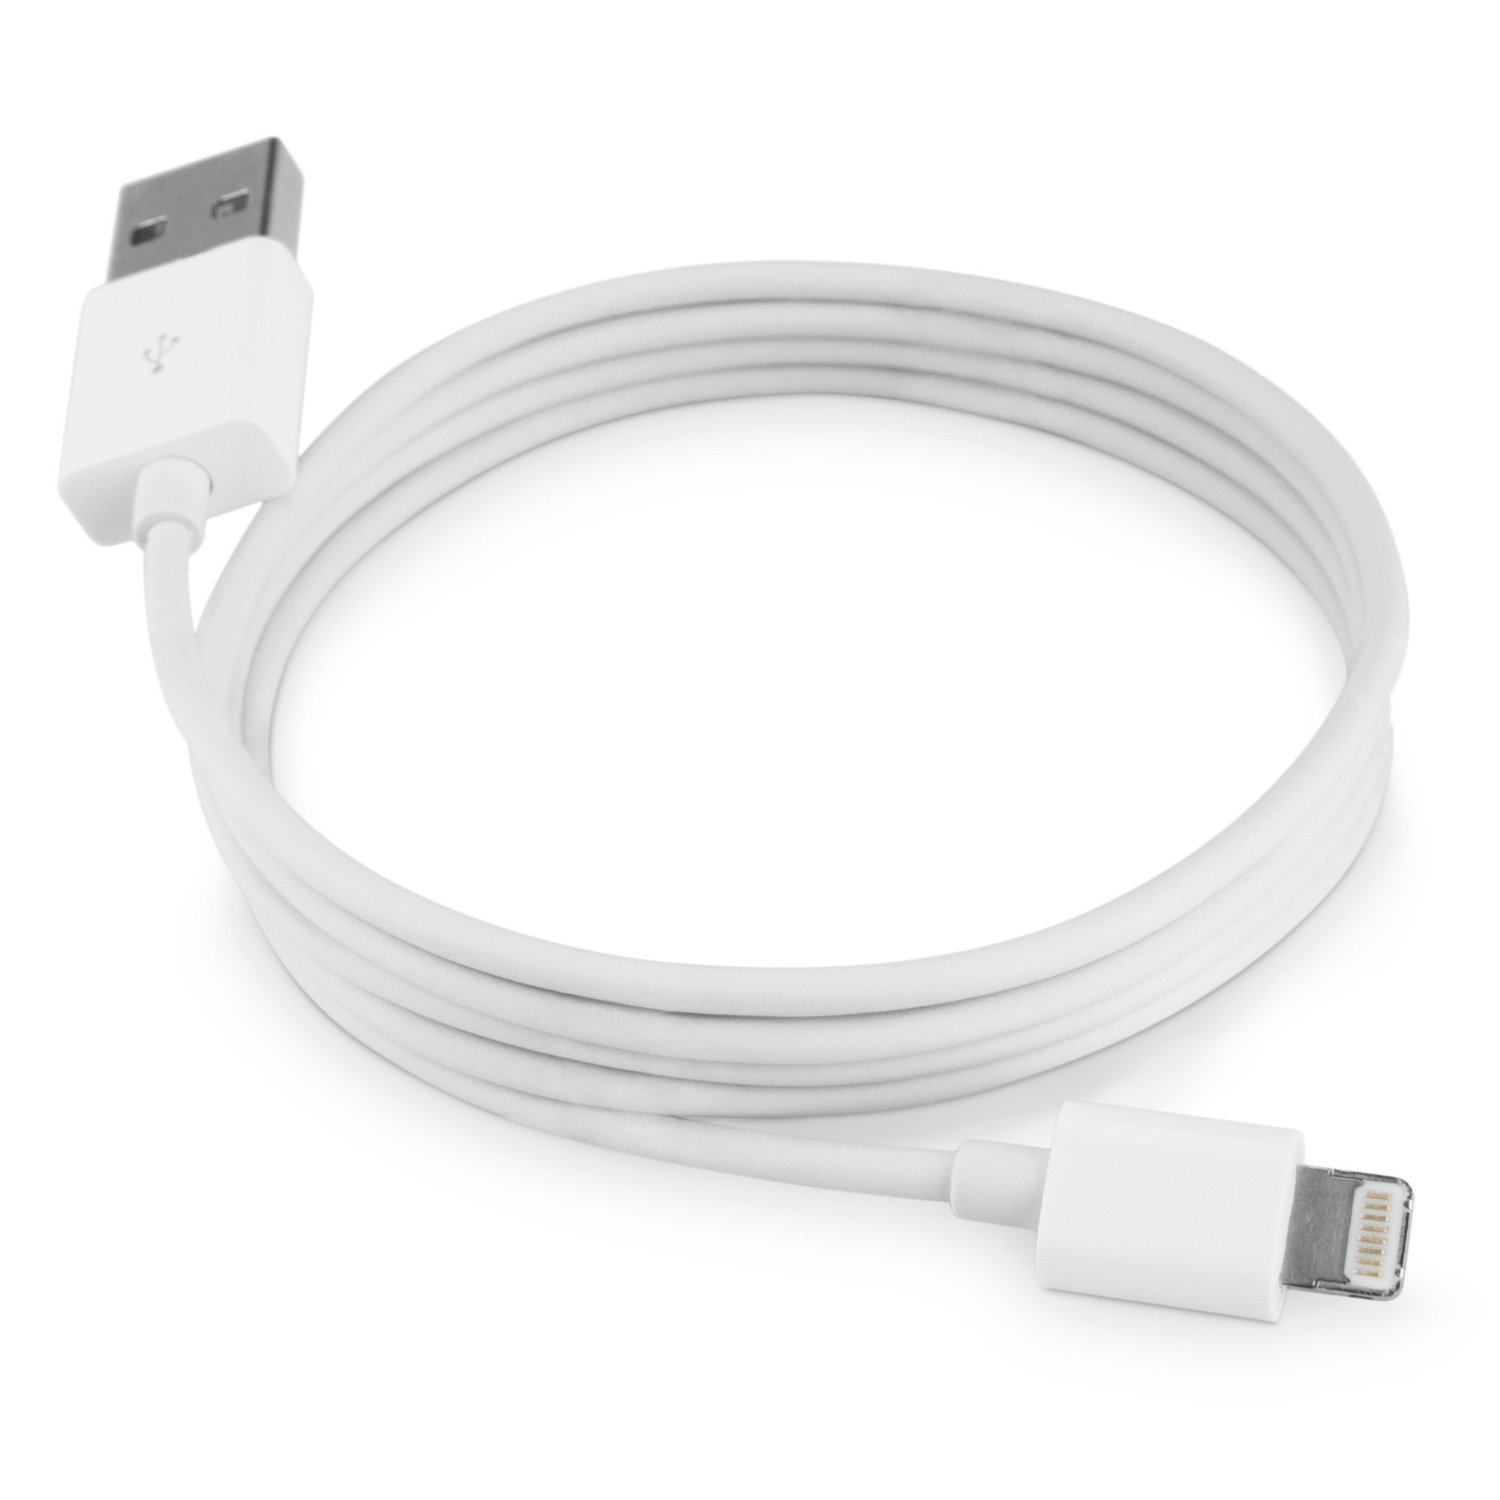 USB Apple iPhone 5 Lightning Cable - 01756812104 large image 0